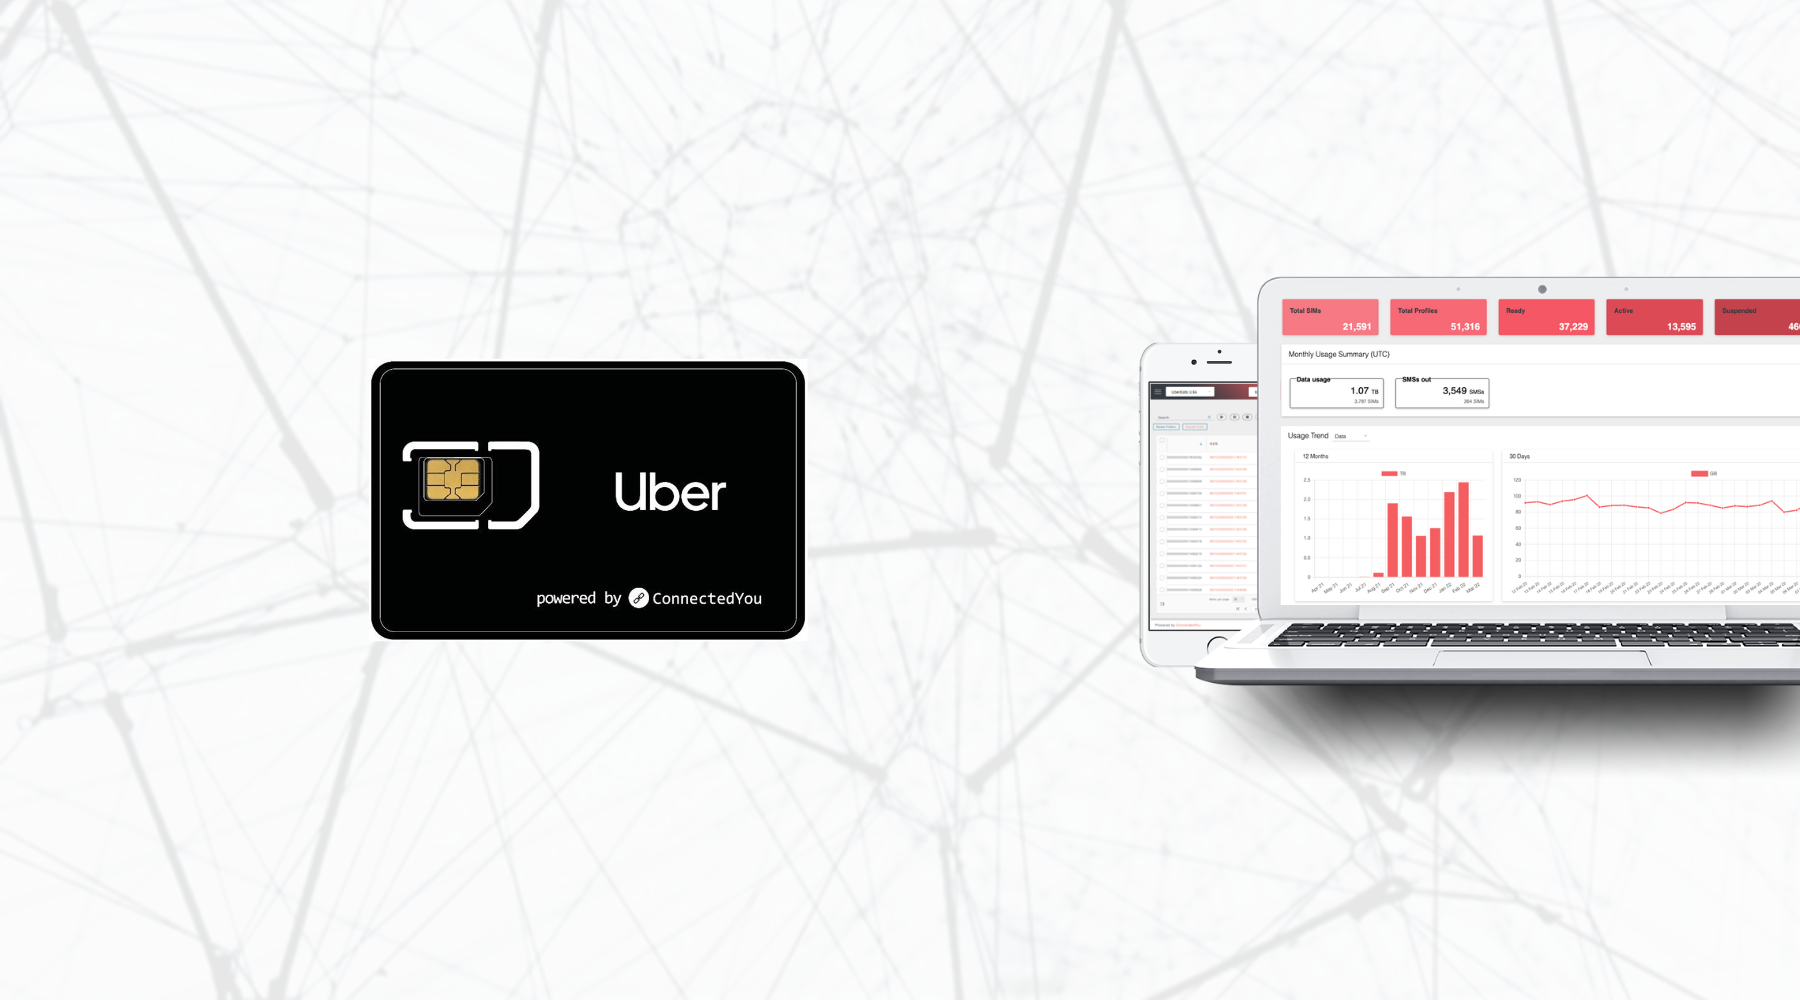 Uber & ConnectedYou: Breaking barriers In IoT adoption